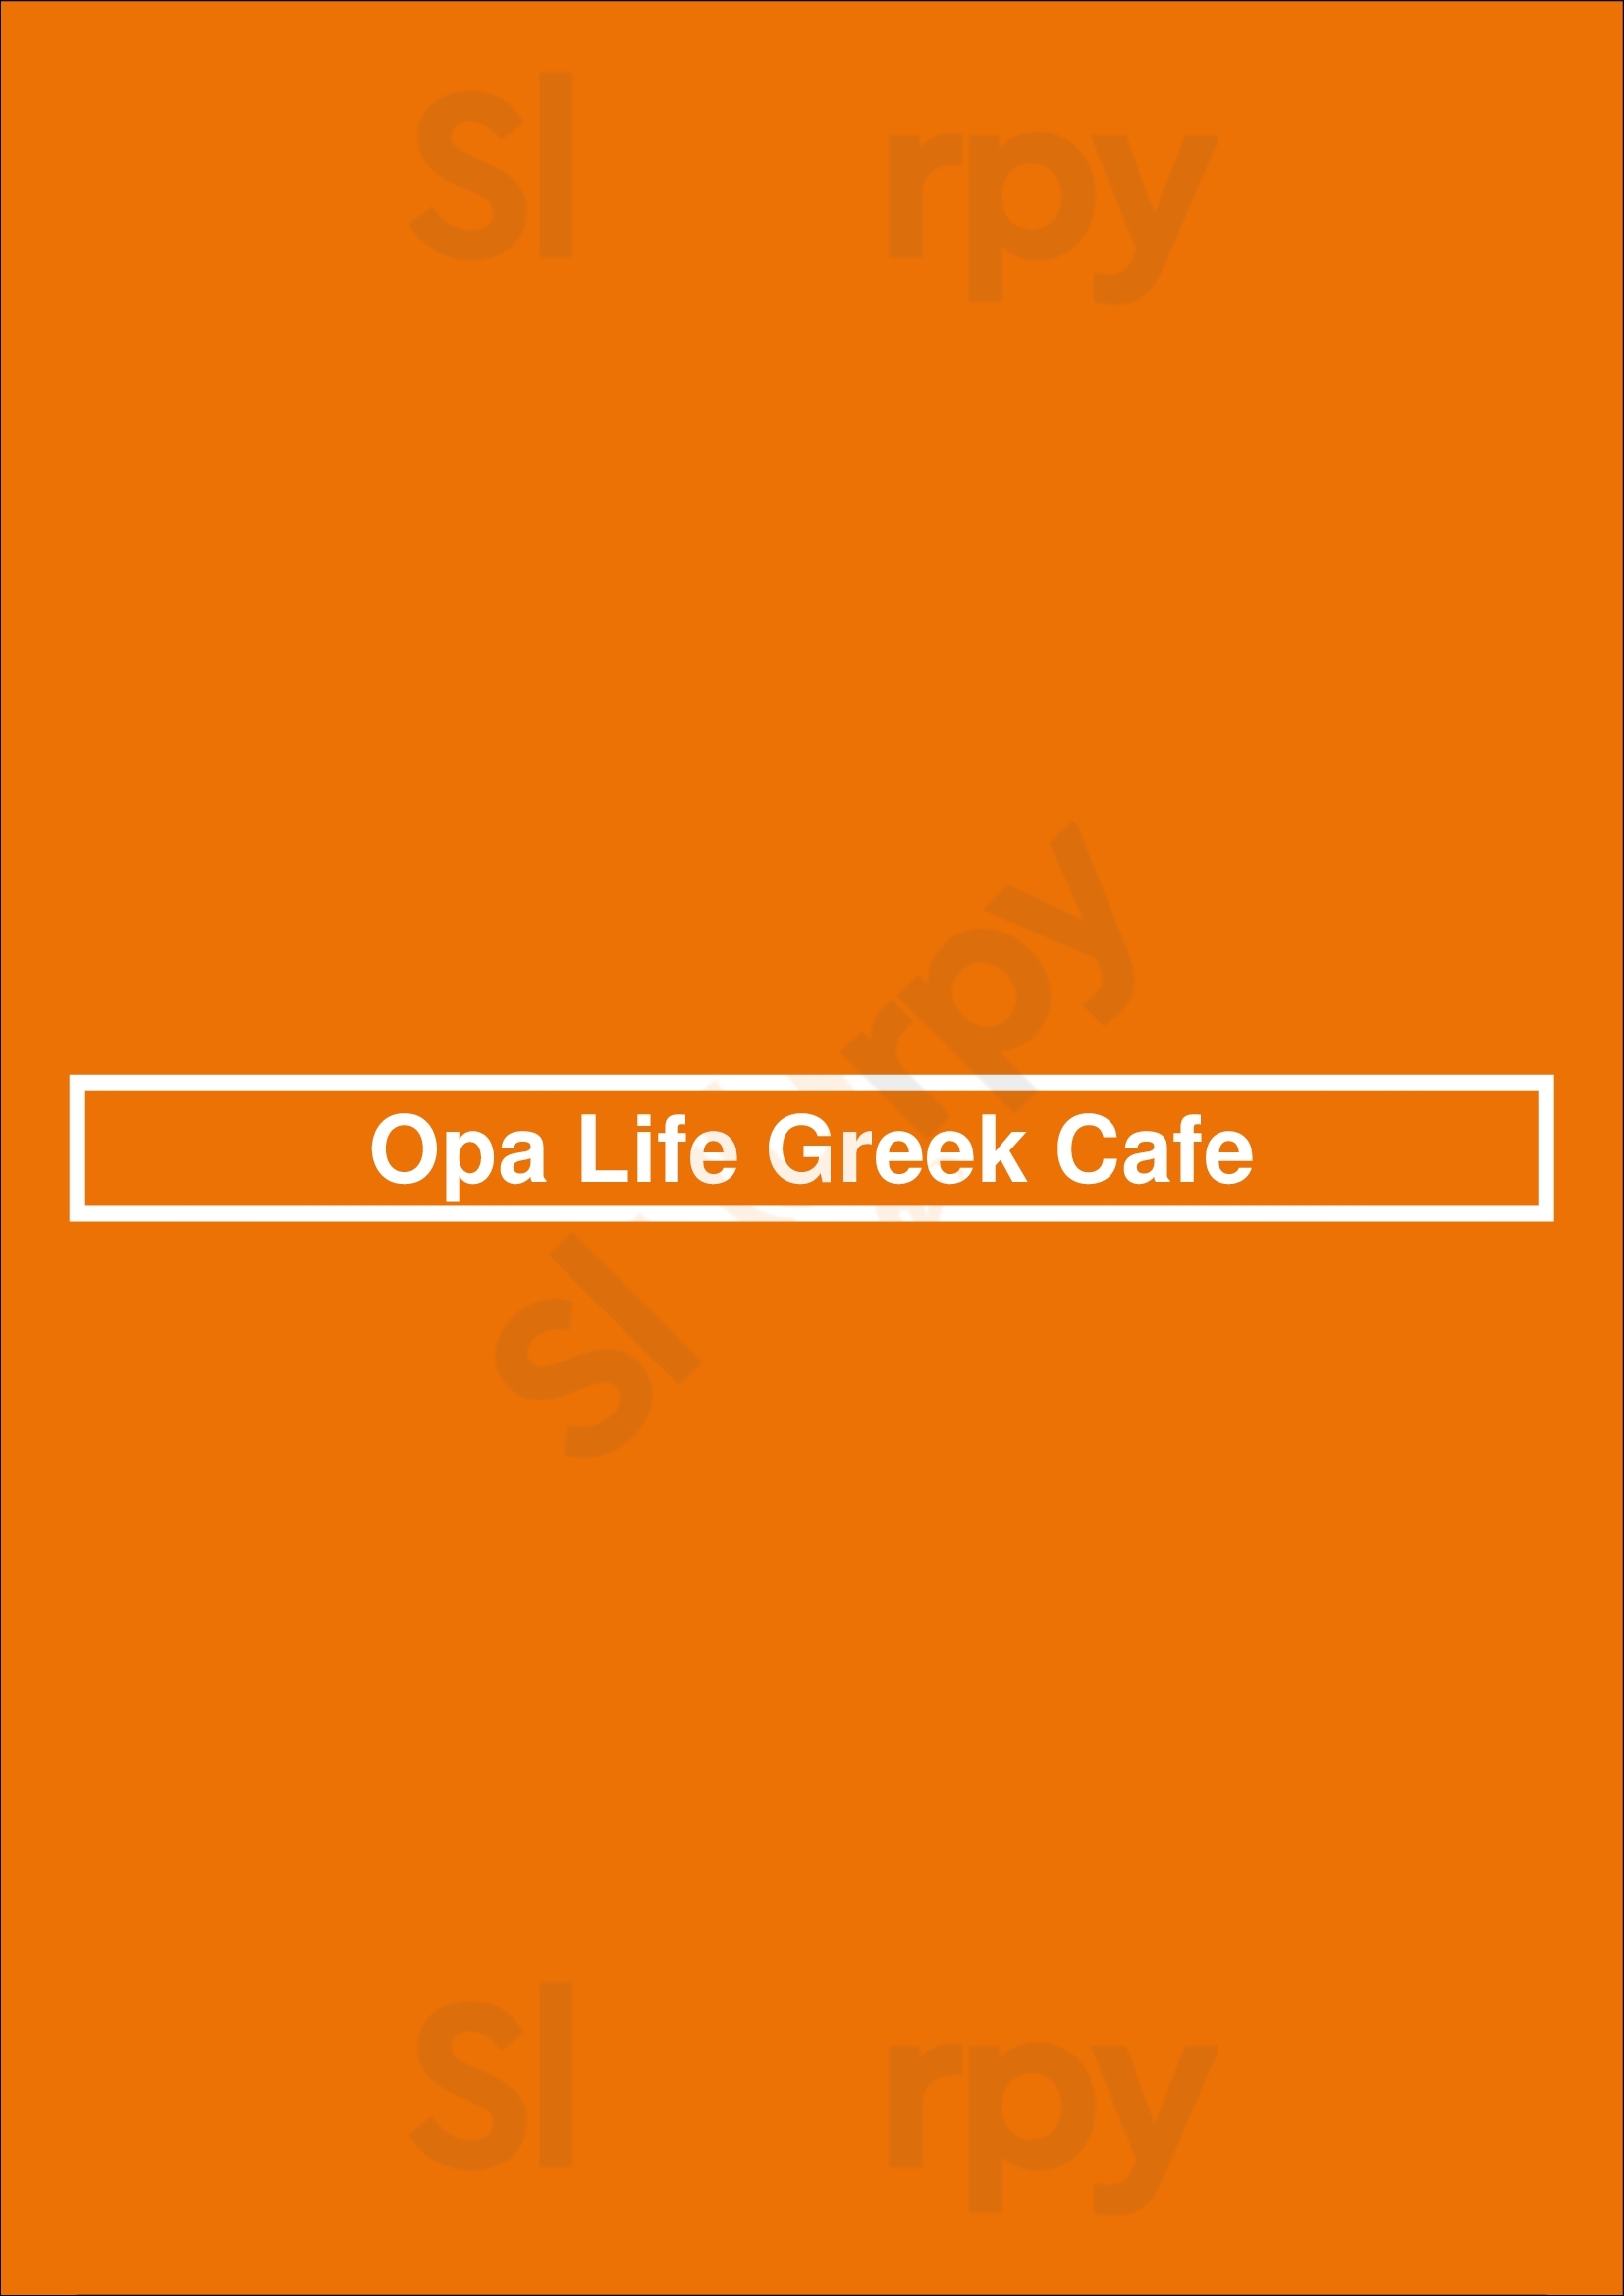 Opa Life Greek Cafe Glendale Menu - 1